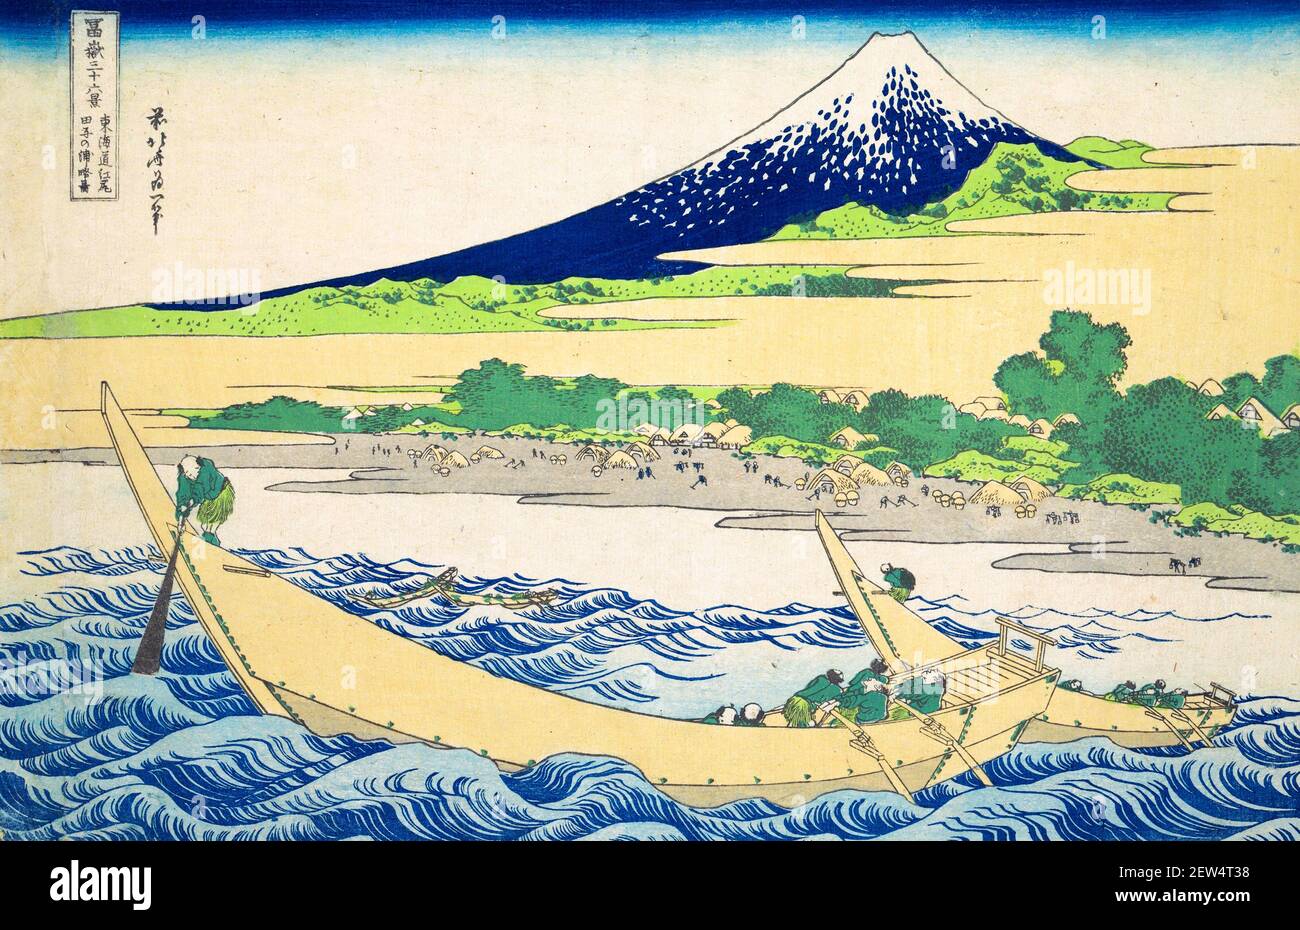 Hokusai. Tago Bay near Ejiri on the Tōkaidō (Tōkaidō Ejiri Tago no ura ryaku zu), by Katsushika Hokusai (葛飾 北斎, c. 1760-1849), color woodblock print, c. 1830-32, from the series Thirty-six Views of Mount Fuji (Fugaku sanjūrokkei) Stock Photo